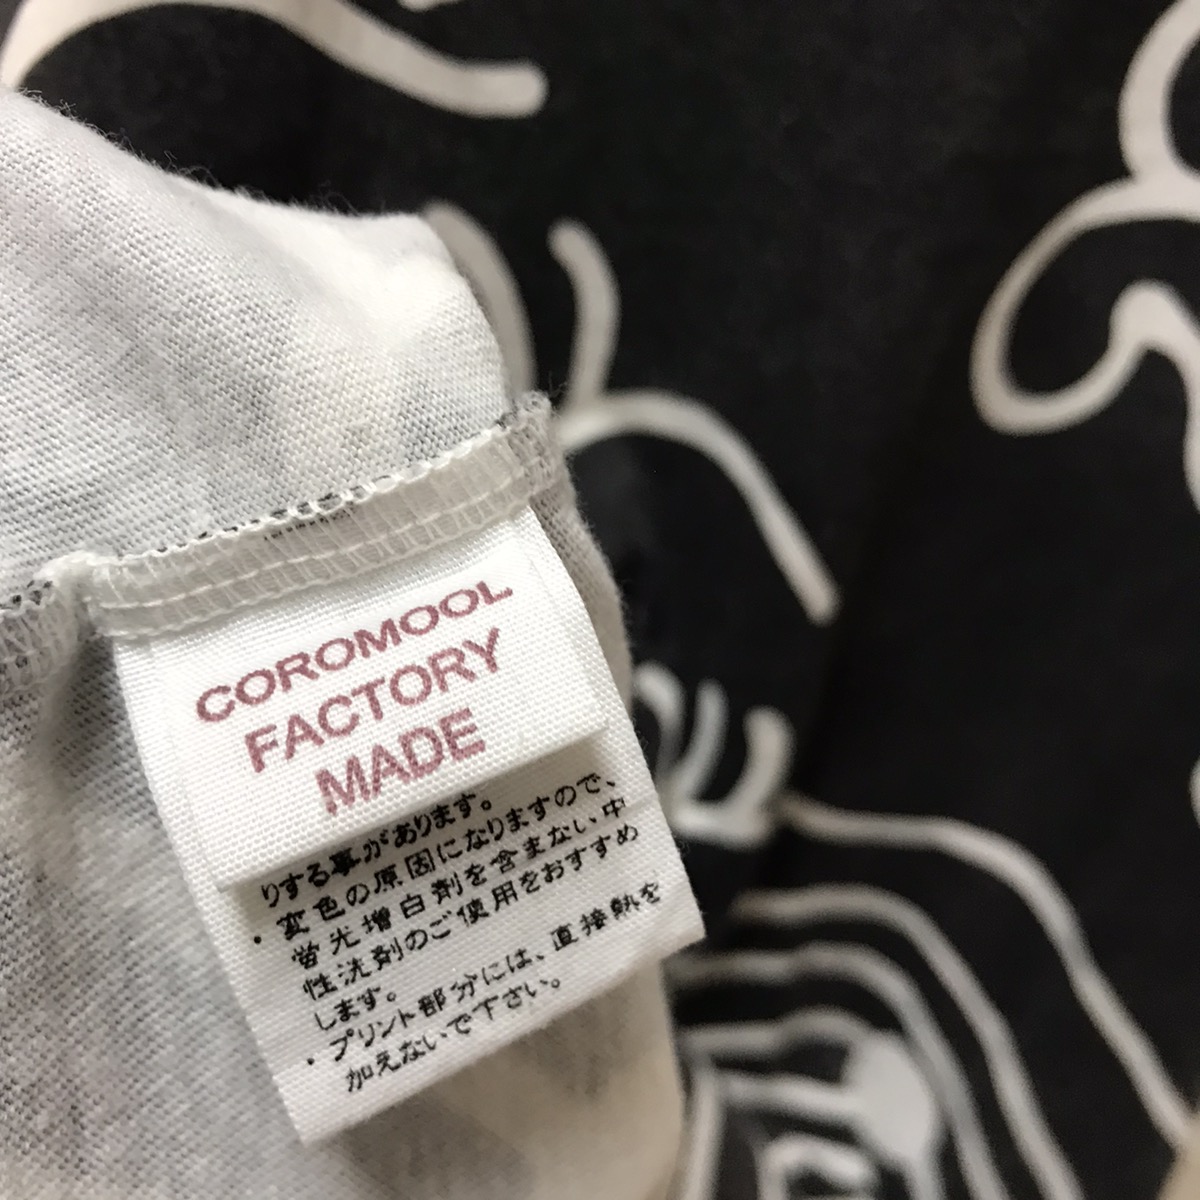 Coromool factory made kyoto samurai tshirt made in japan - 6